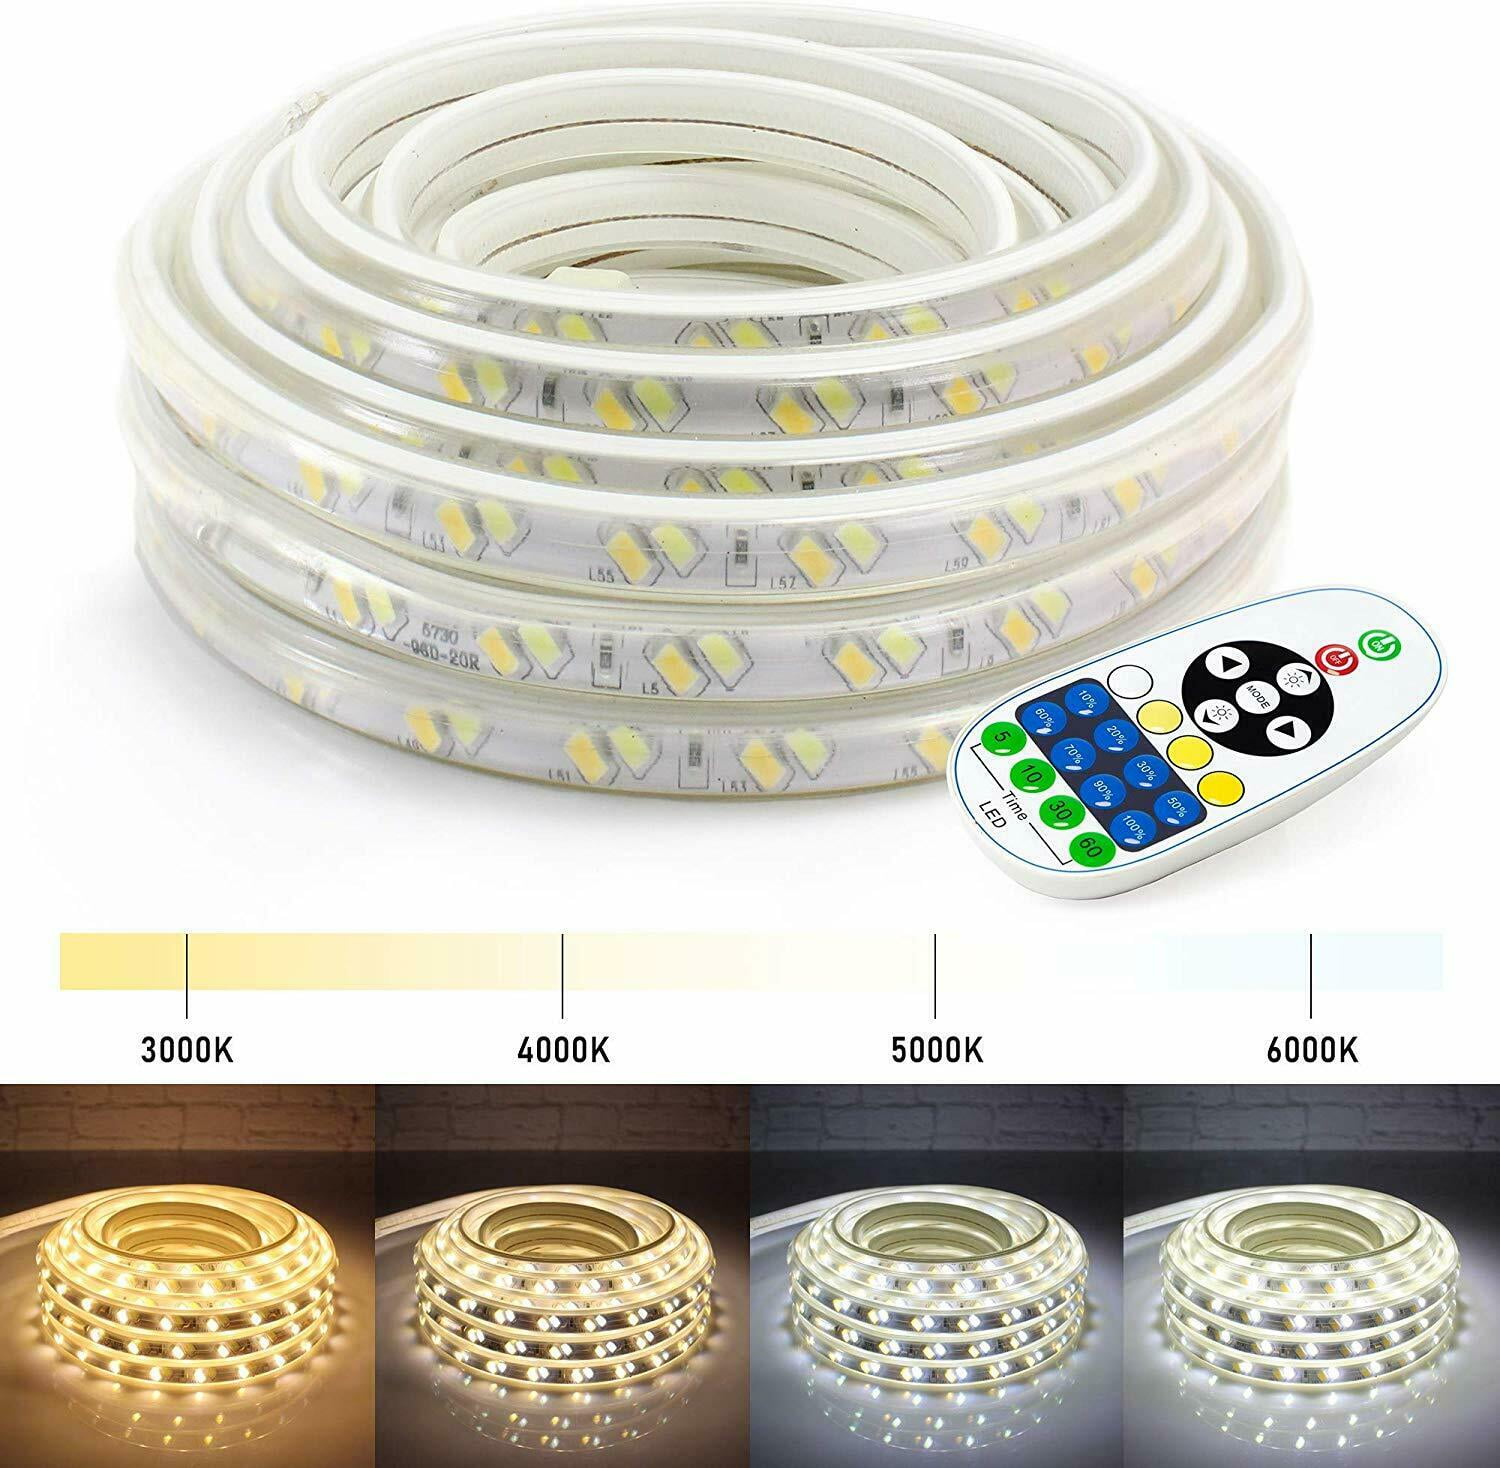 1-5M 5630 SMD LED Light Flexible Strip Waterproof Cool White/Warm White Decor 